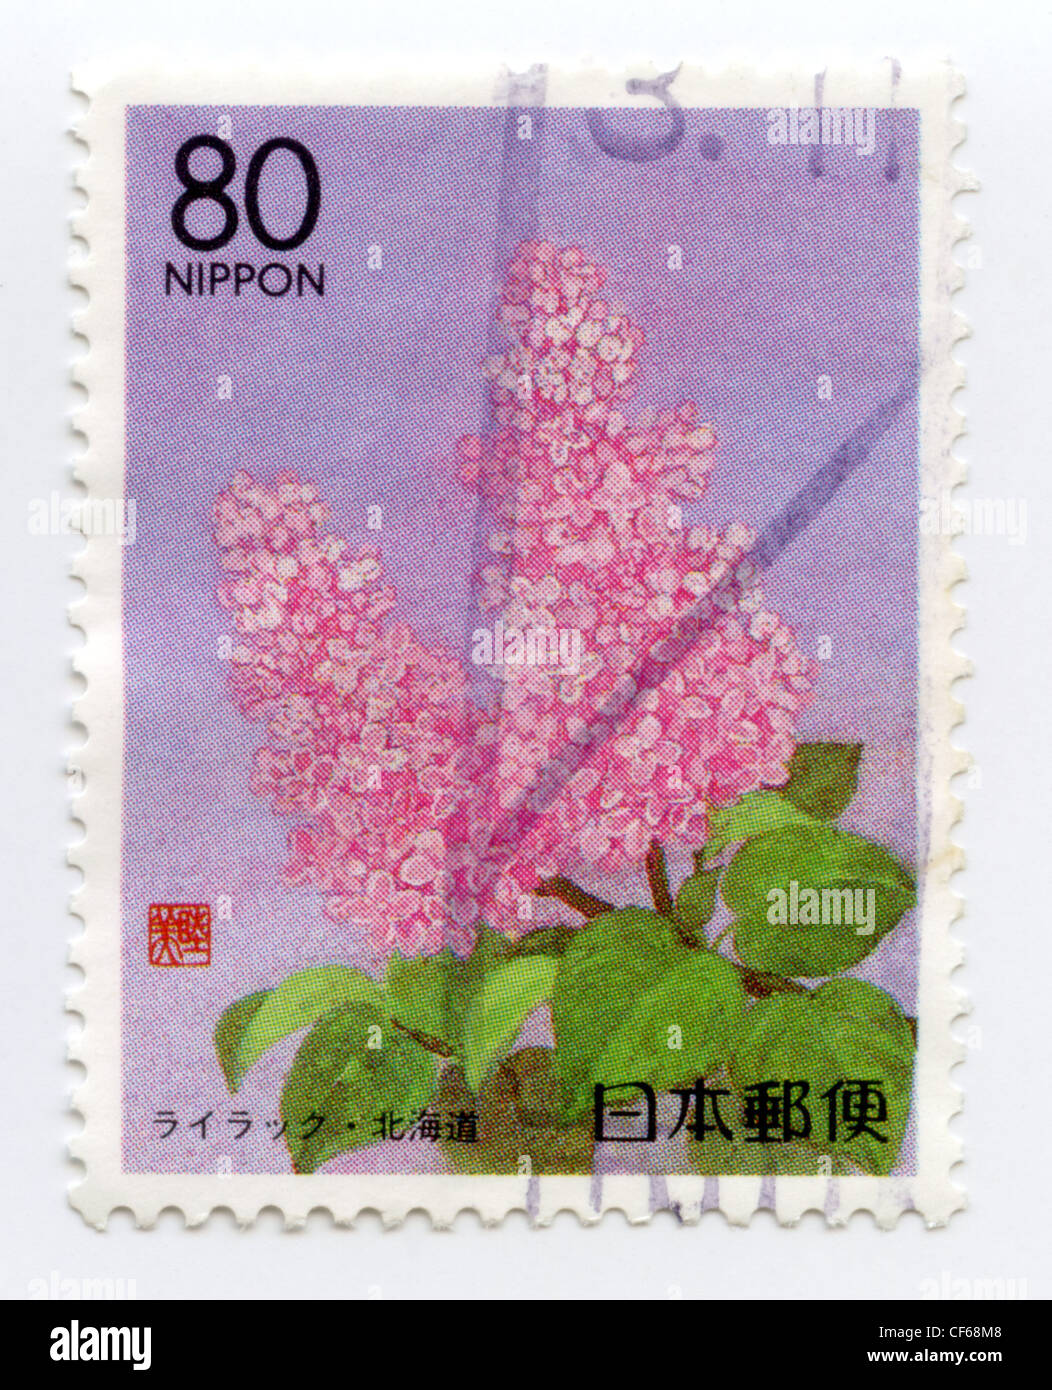 Japan postage stamp Stock Photo